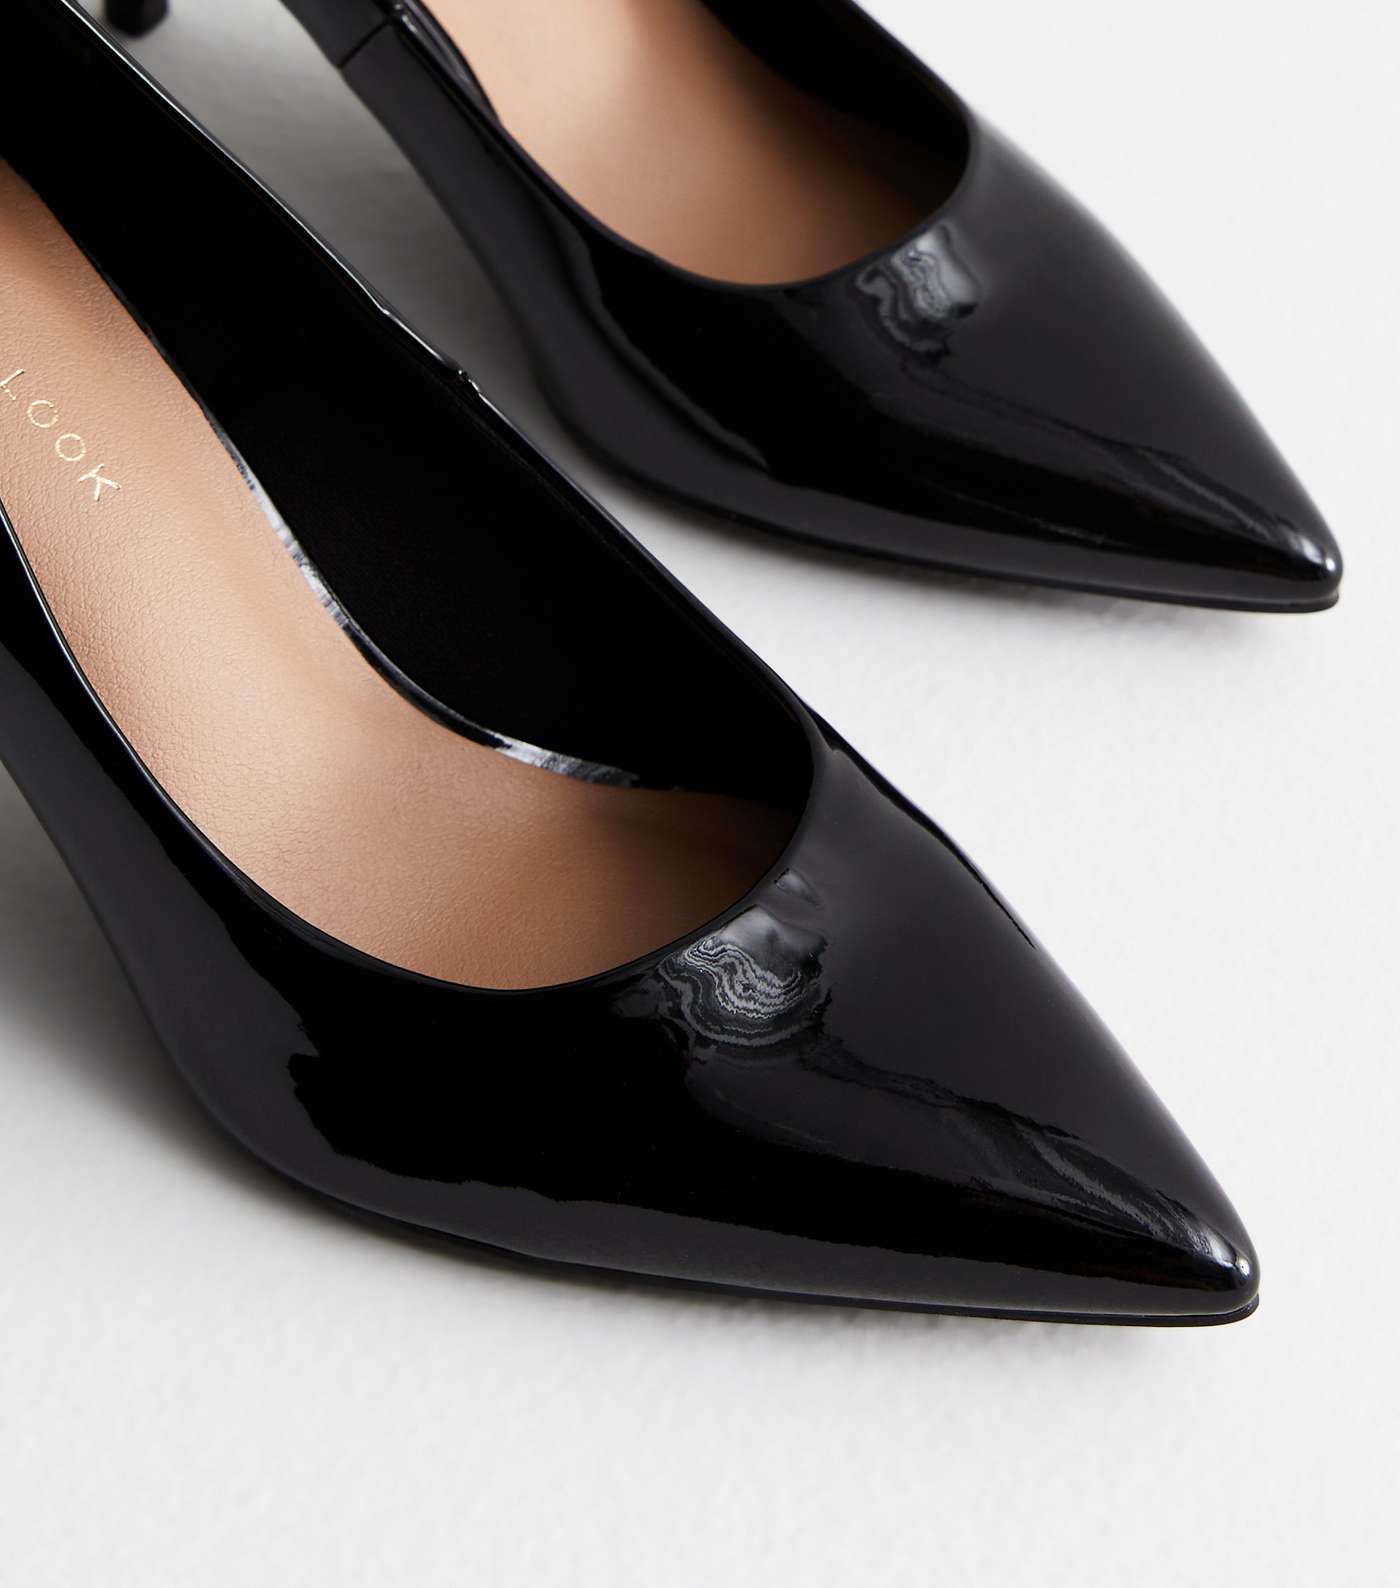 Black Patent Stiletto Heel Court Shoes Image 3